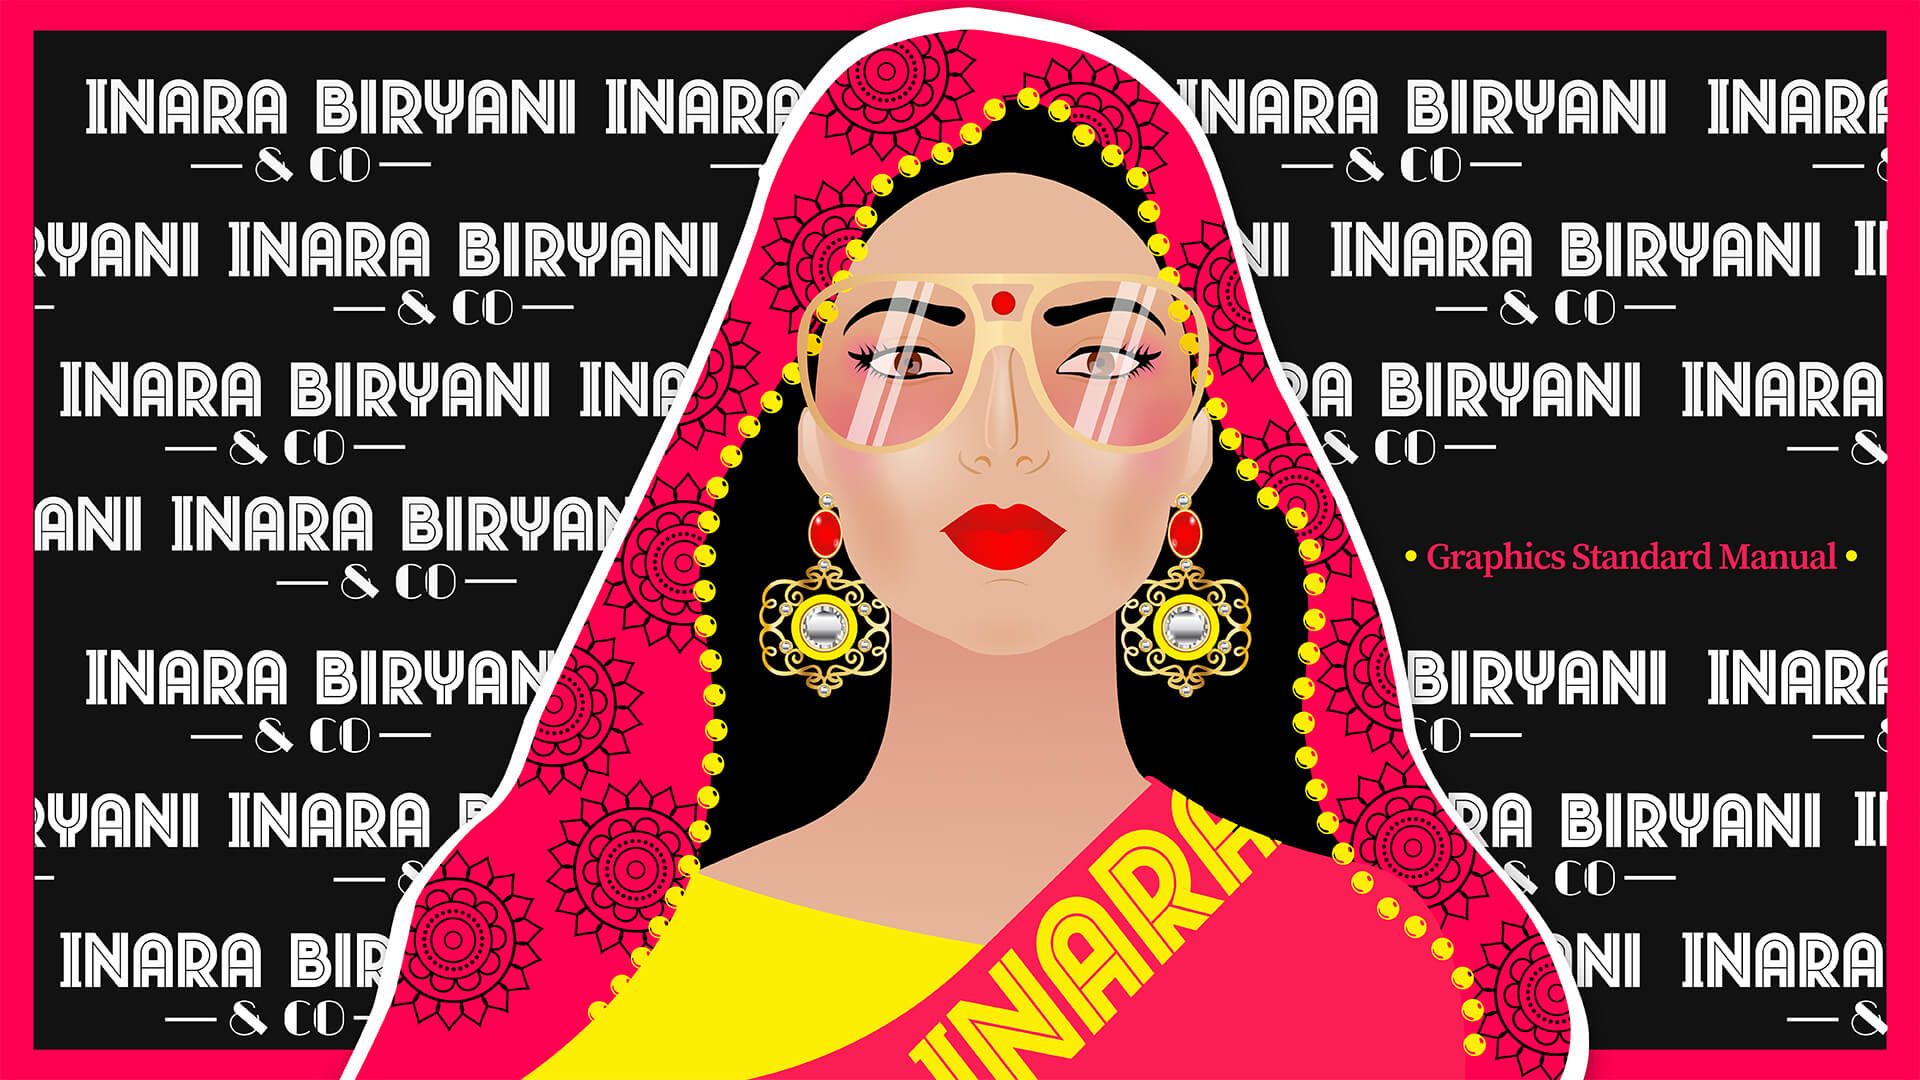 Inari Biryani Branding Design - Graphics Manual - Platinum 99 Perth WA 01